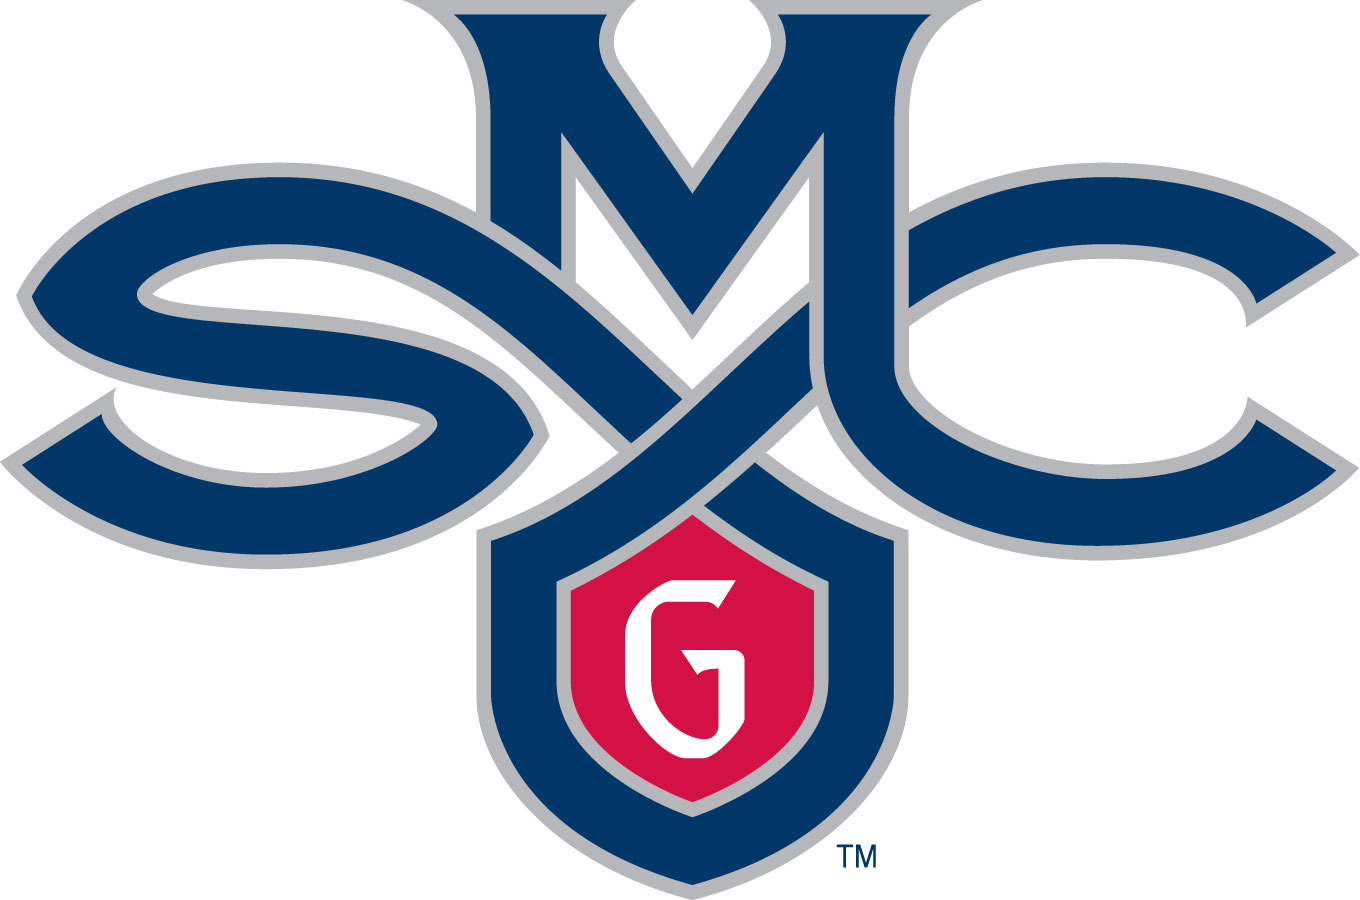 Saint Mary’s College of California logo